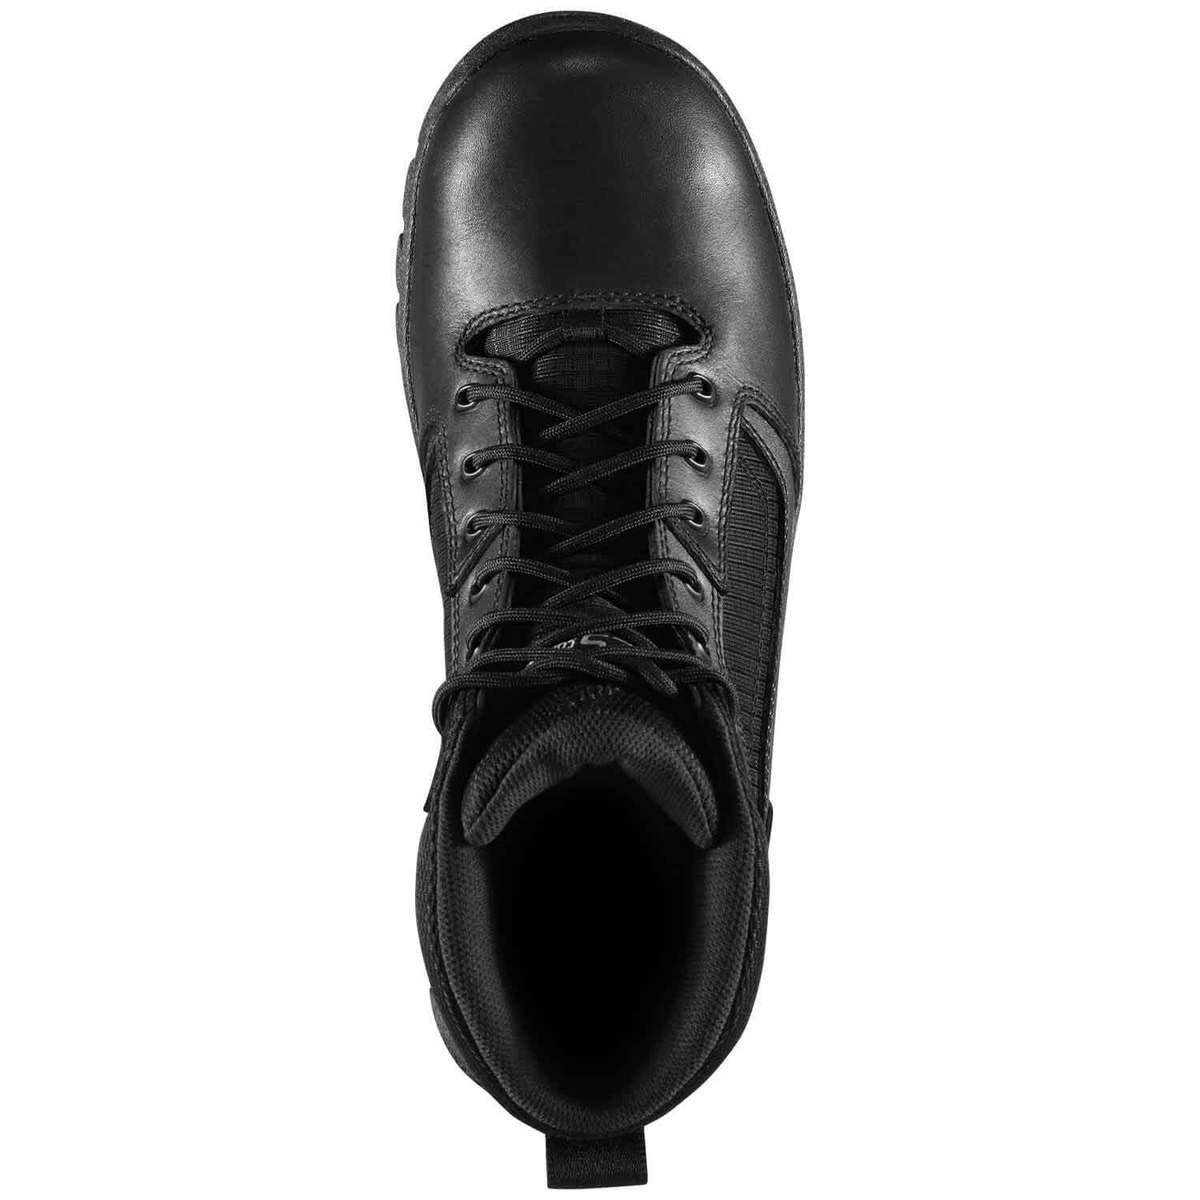 Danner Men's Lookout Soft Work Boots - Black - Size 10 EE - Black 10 ...